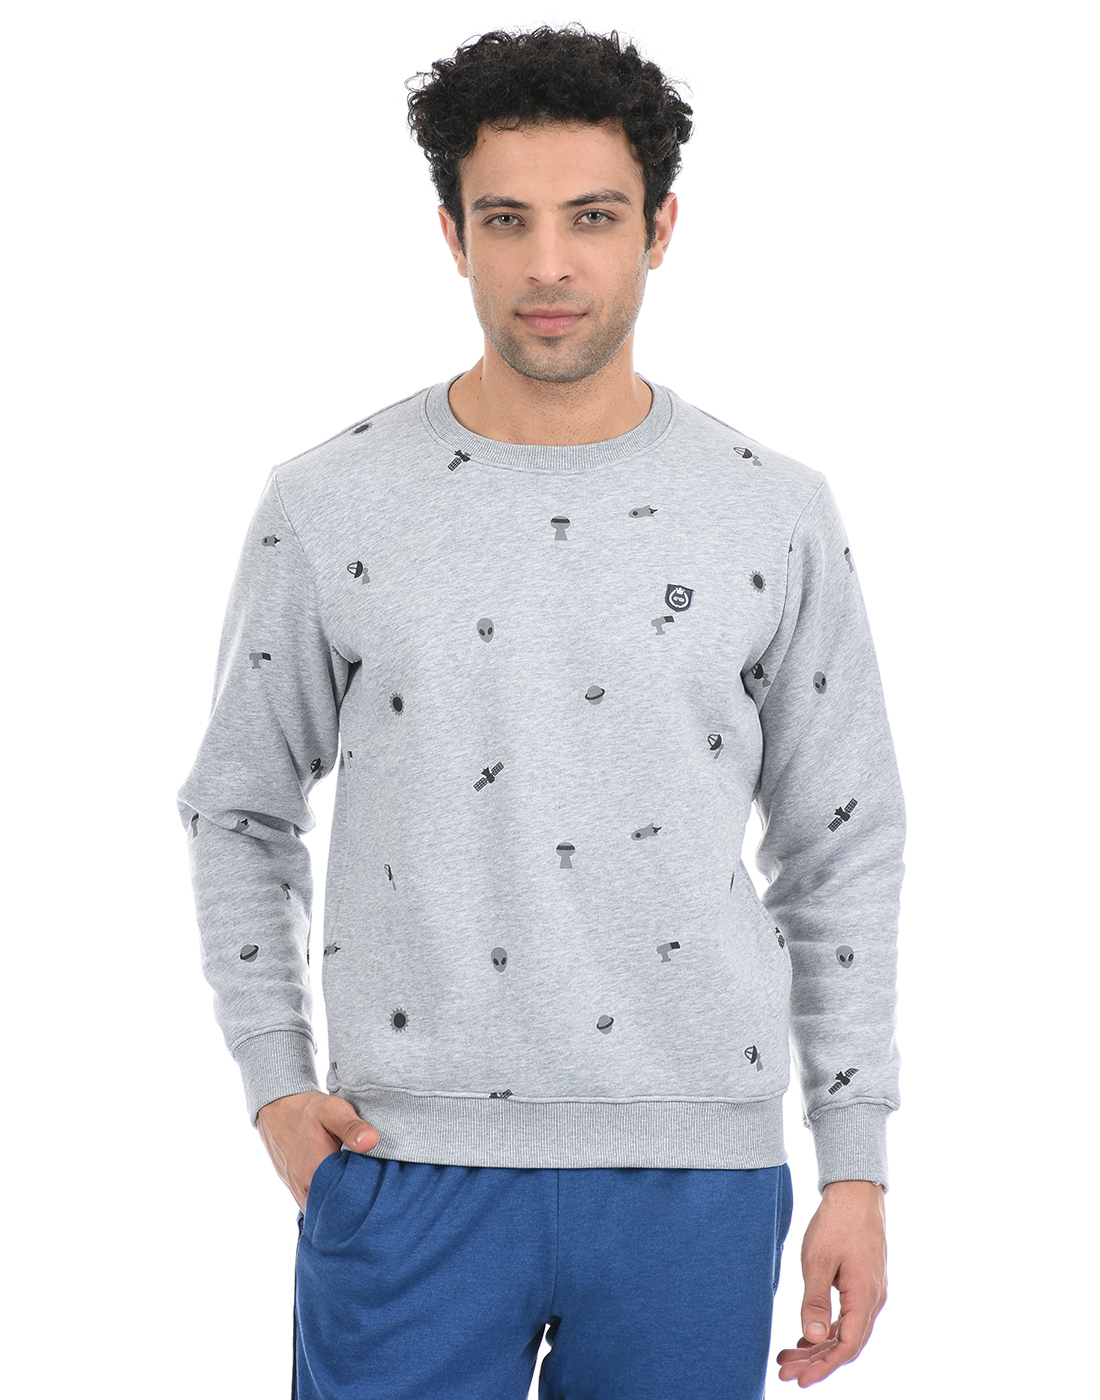 Cloak & Decker by Monte Carlo Men Printed Grey Sweatshirt